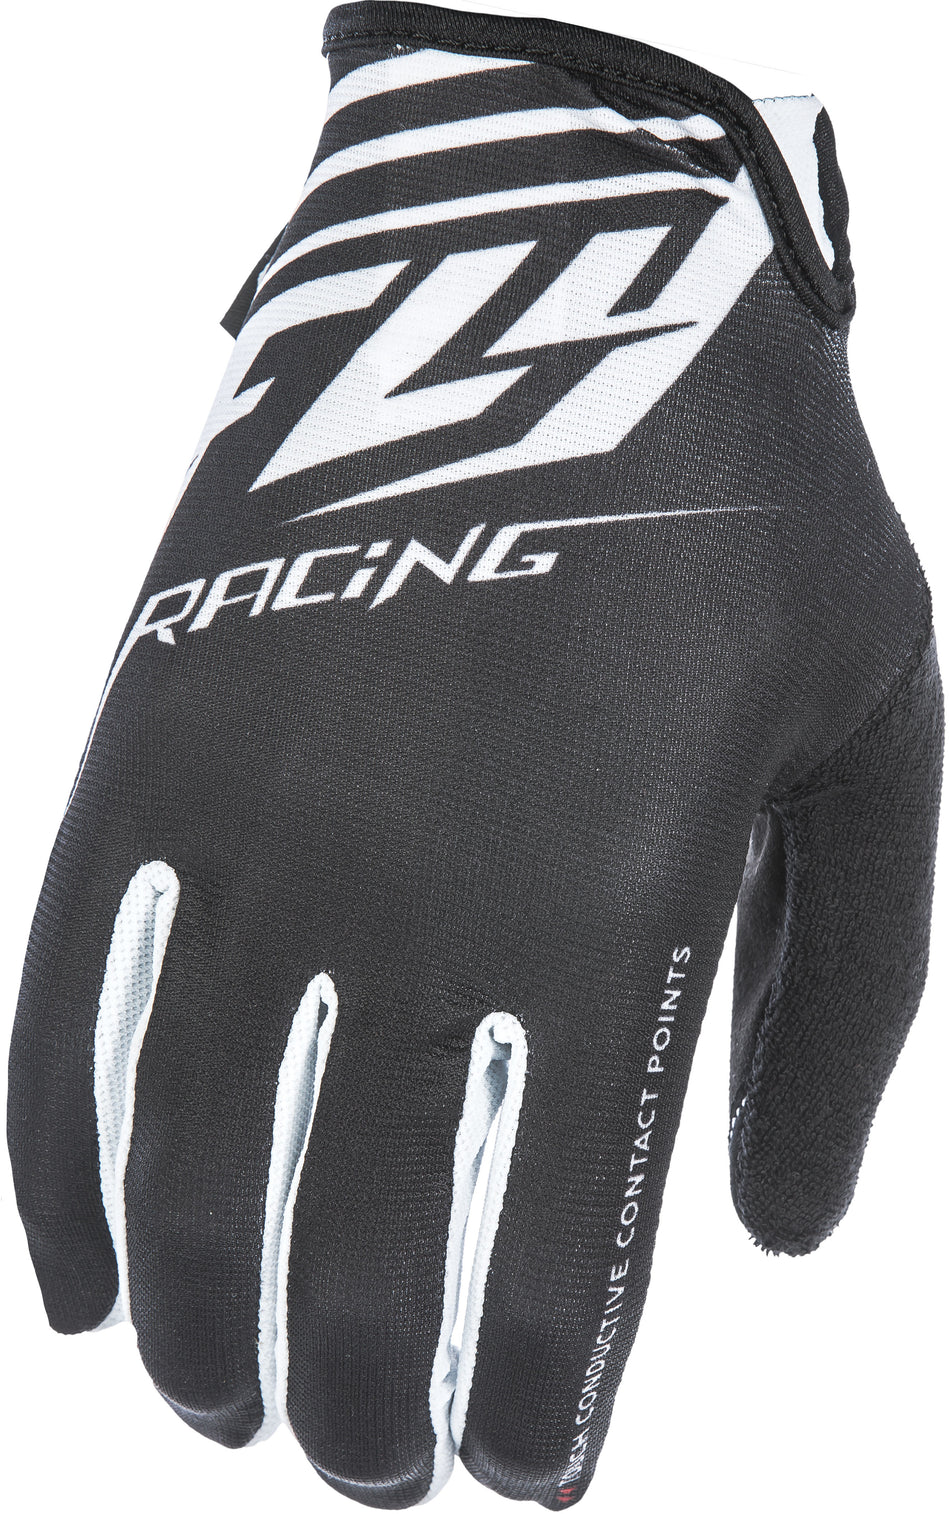 FLY RACING Media Gloves Black/White Sz 8 350-07408